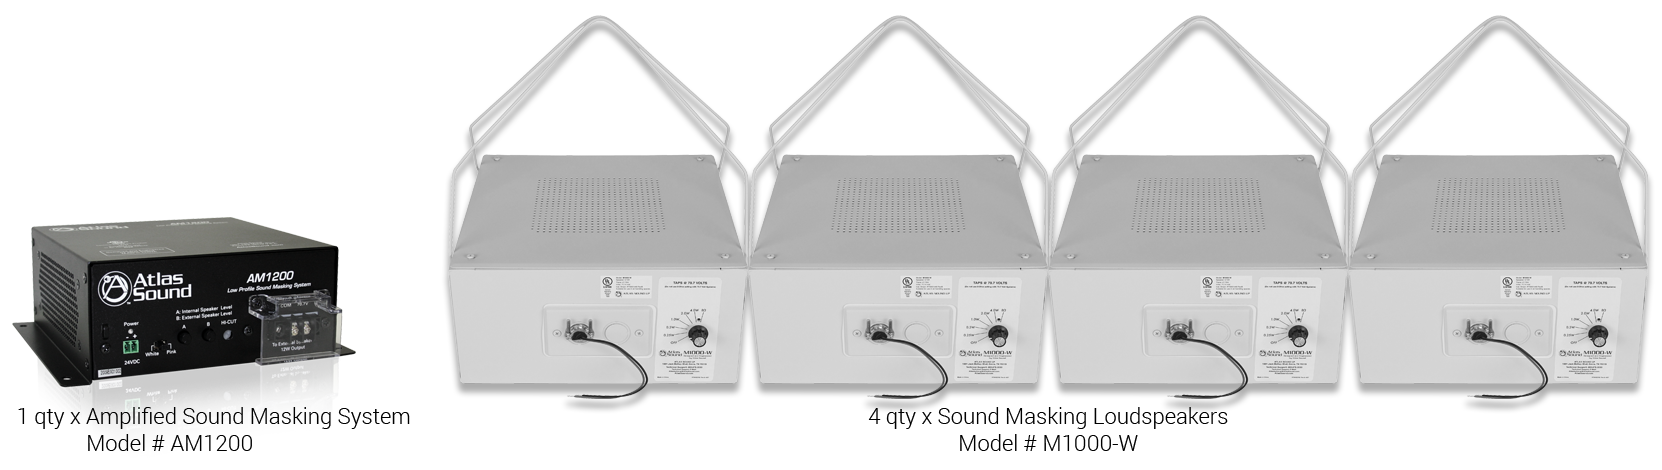  Amplified Sound Masking System & Sound Masking Loudspeaker